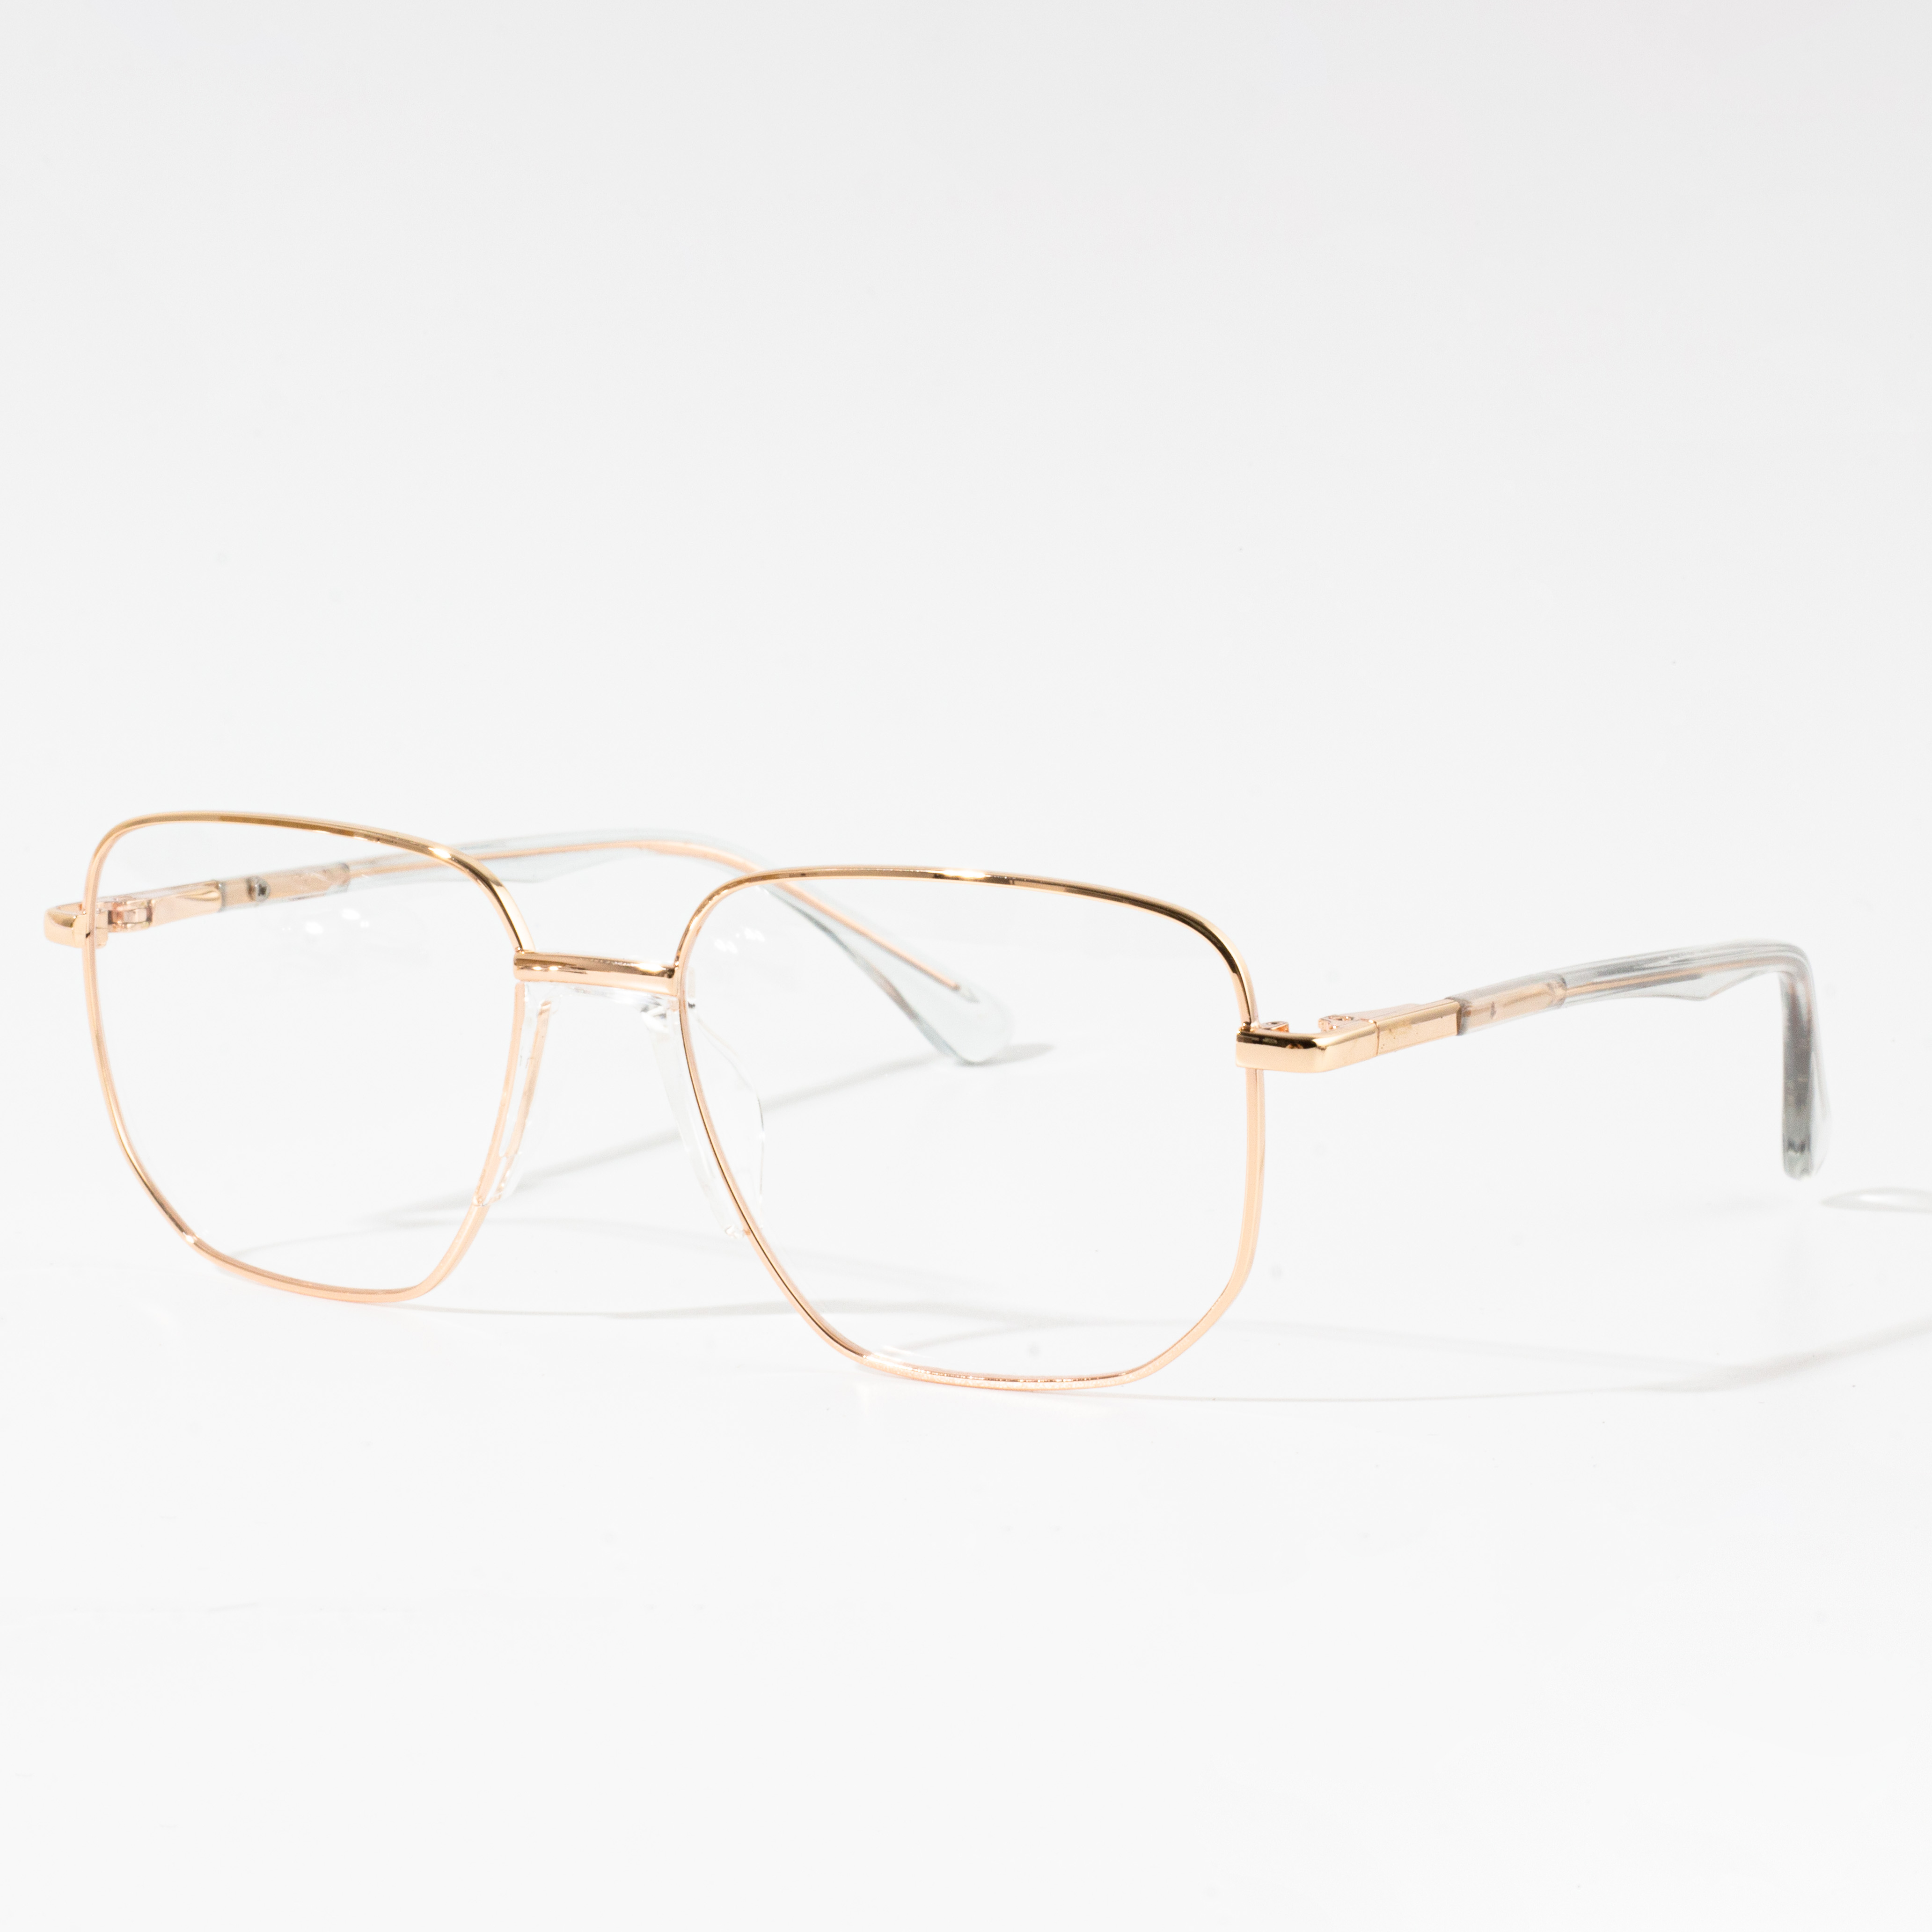 Titanium Glasses Frame (9)